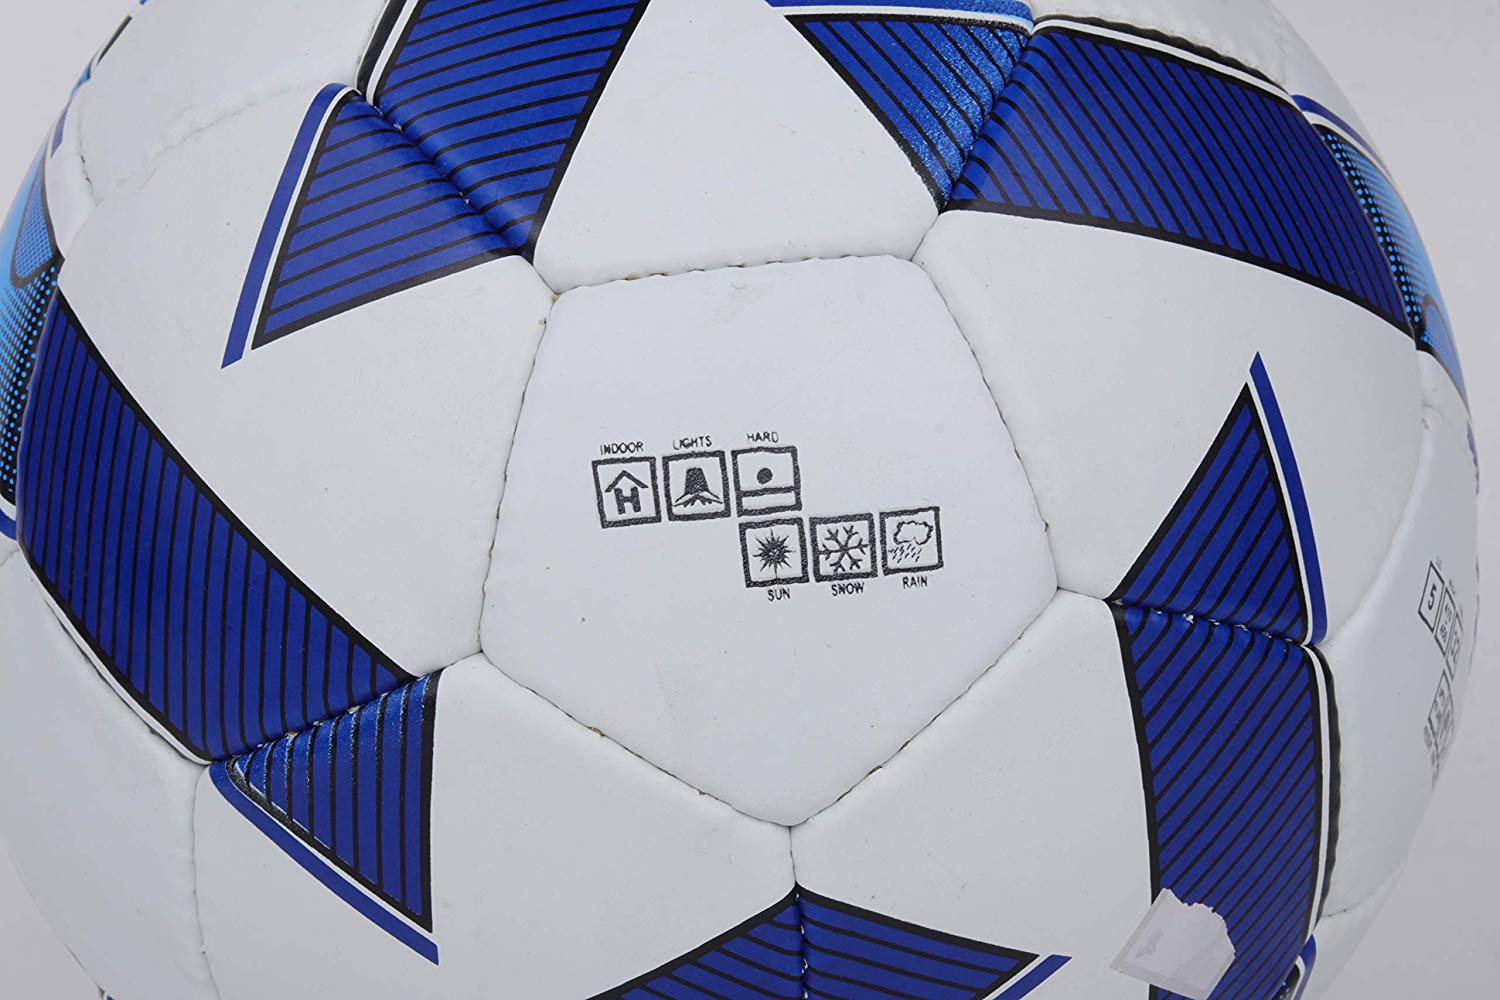 Cosco Milano Football - Size 5 (White/Blue) - Best Price online Prokicksports.com